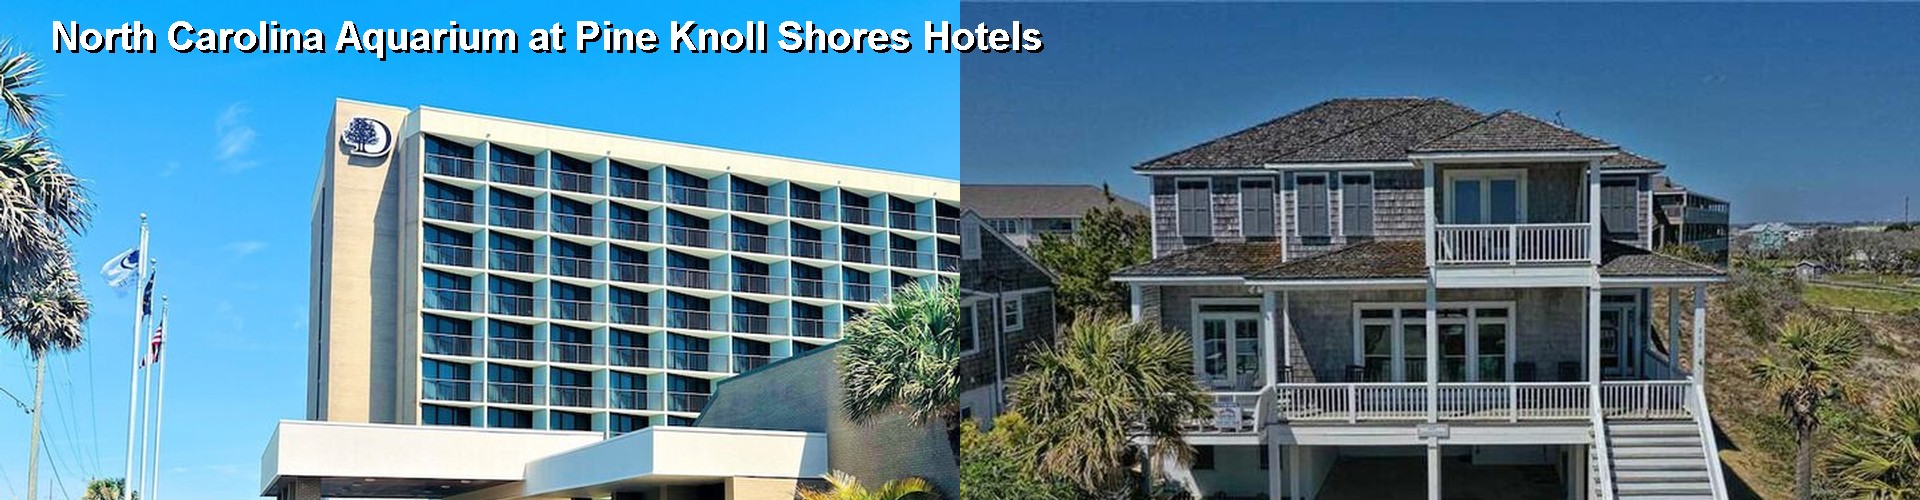 5 Best Hotels near North Carolina Aquarium at Pine Knoll Shores